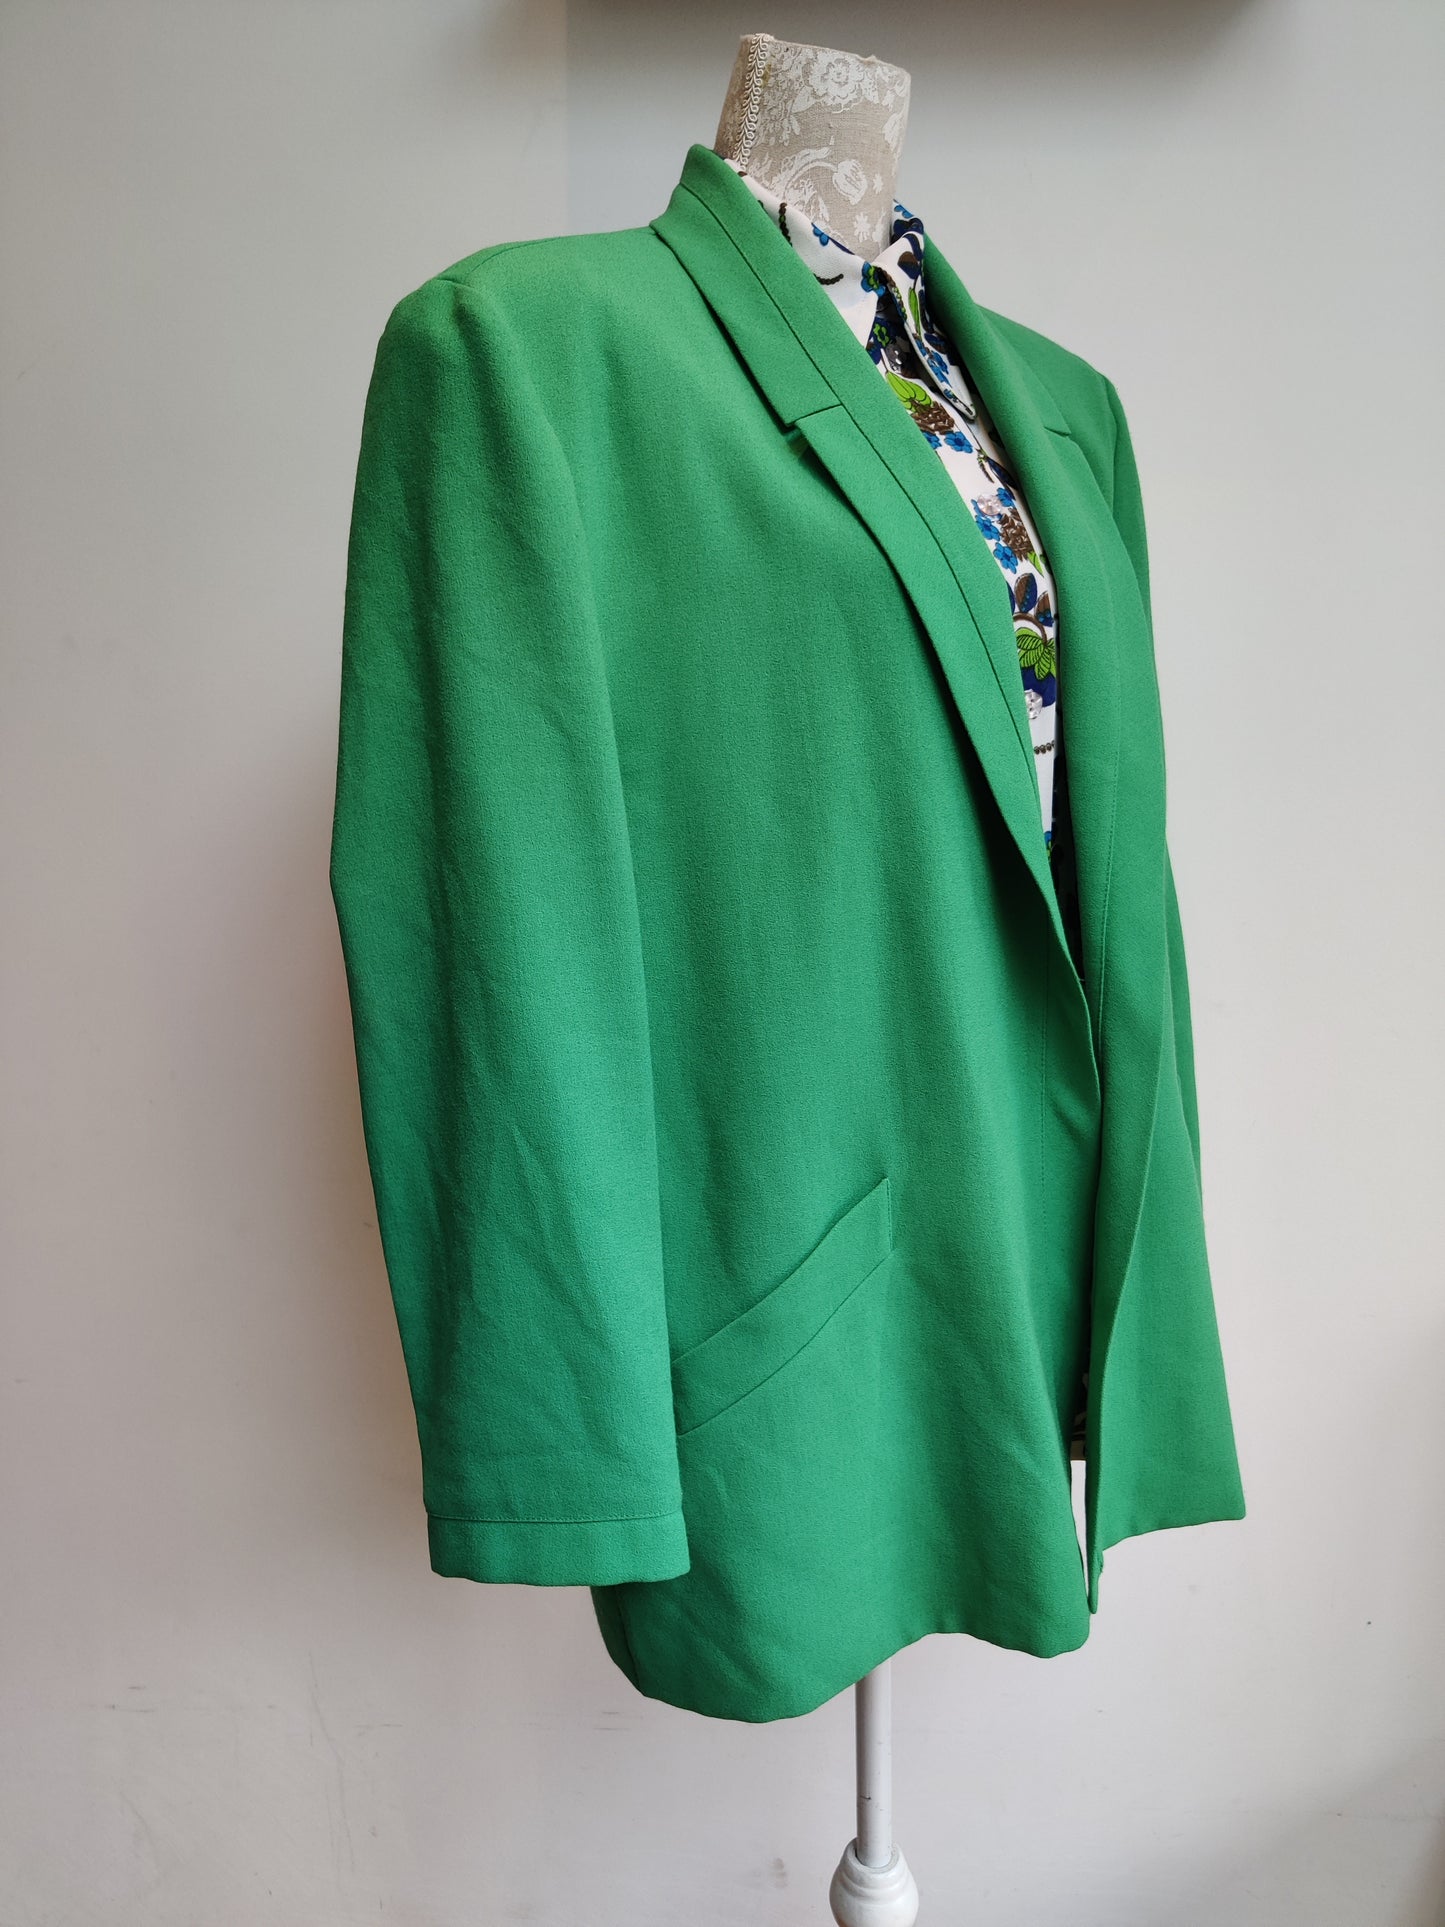 Ladies green 80s jacket plus size.